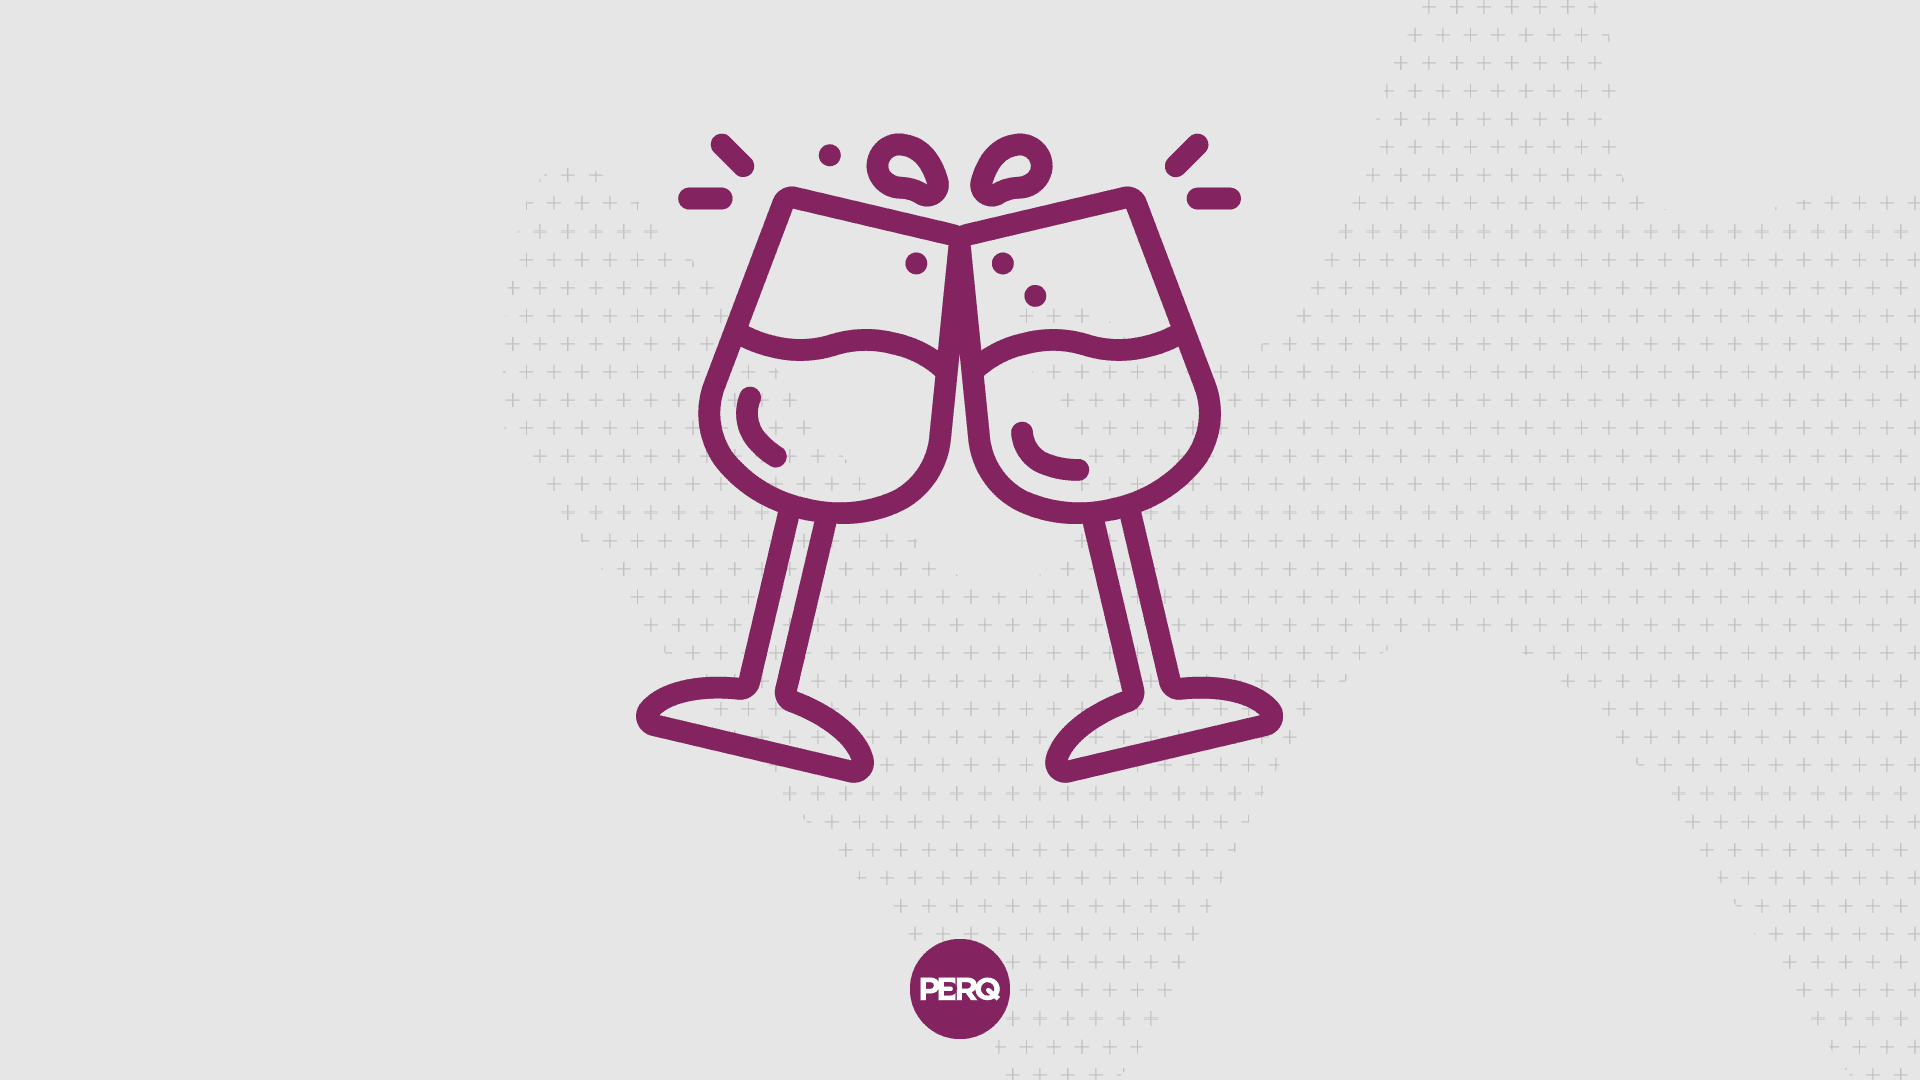 wine glasses clinking with perq logo